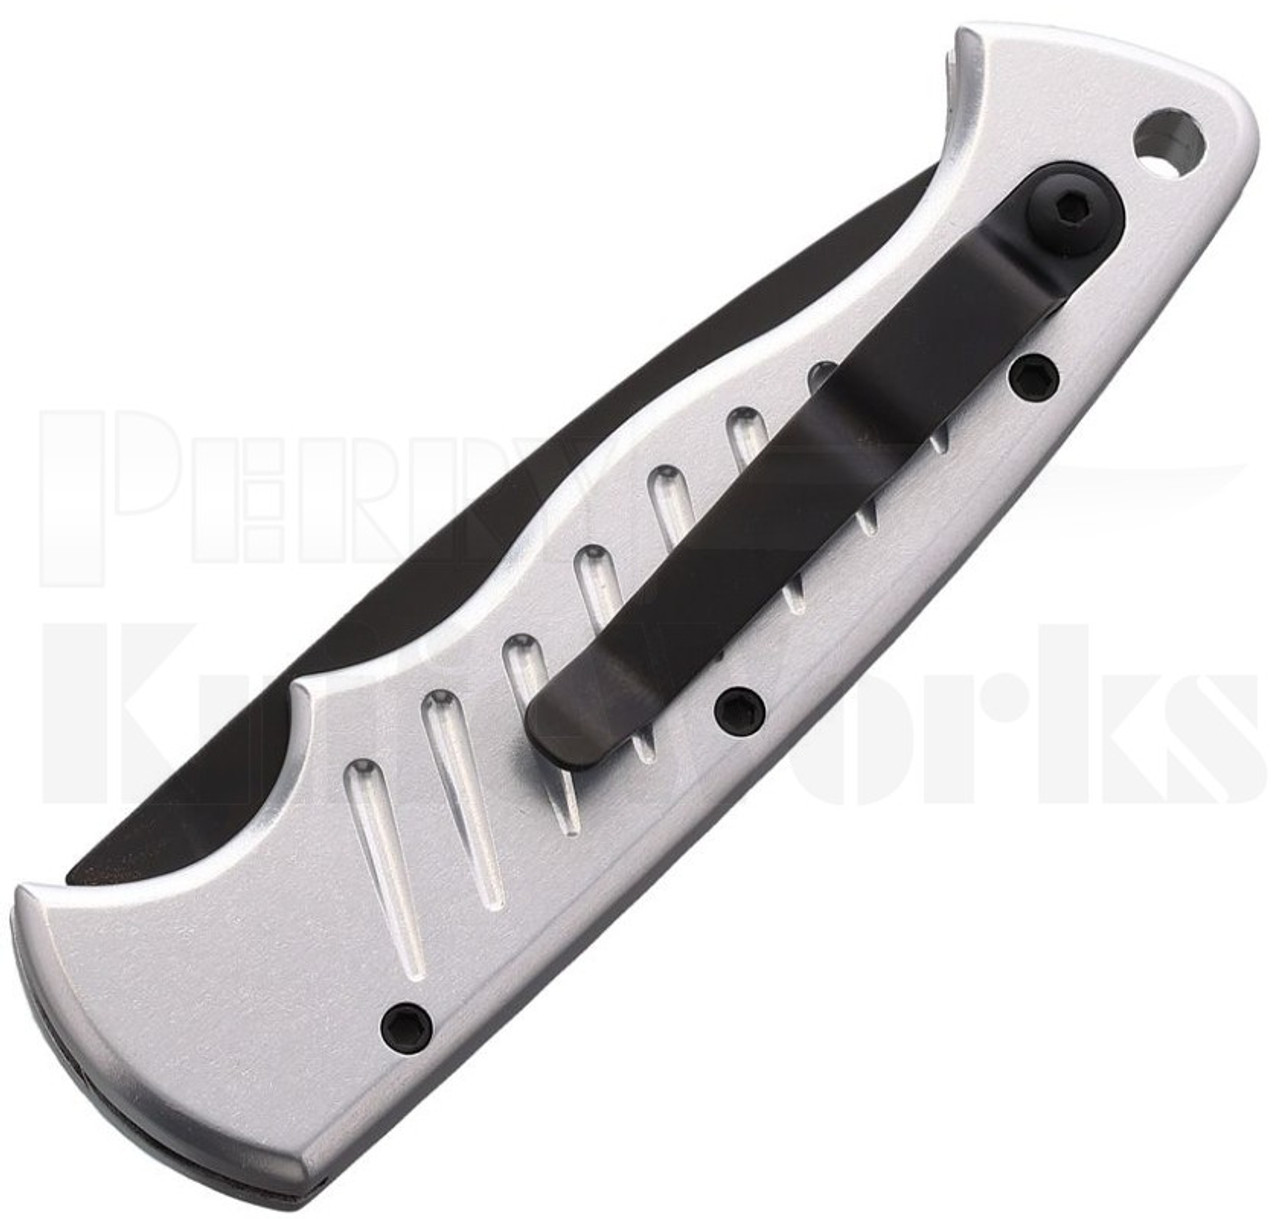 Piranha Pocket Automatic Knife Silver P-1 l Tactical Black